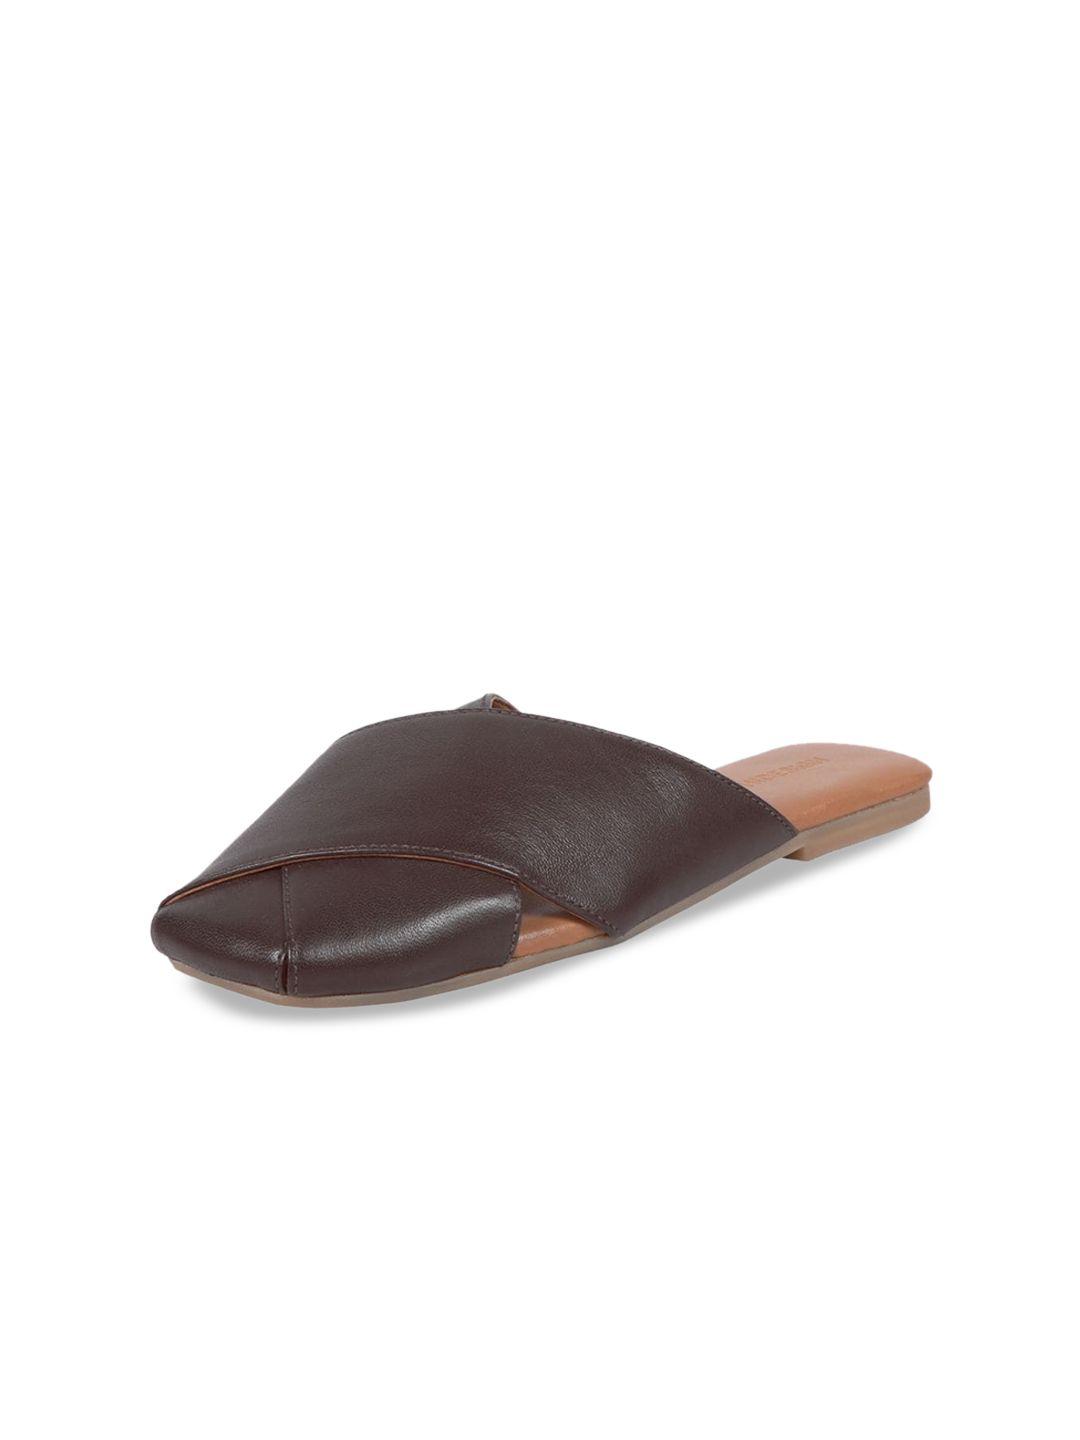 hidesign nara round toe leather mules